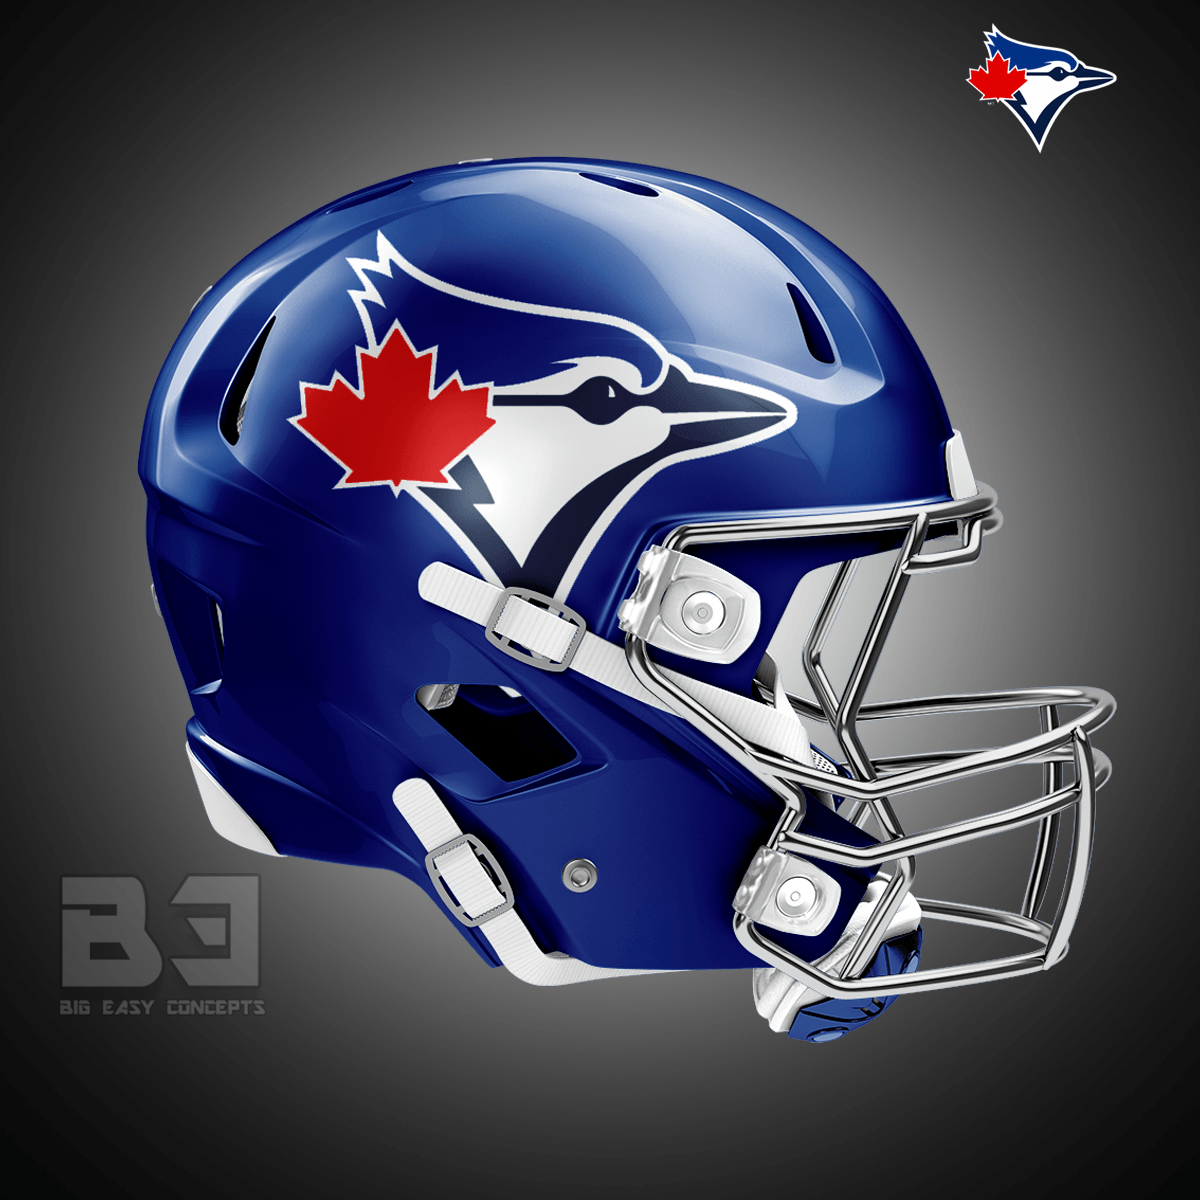 Toronto Blue Jays - Concepts - Chris Creamer's Sports Logos